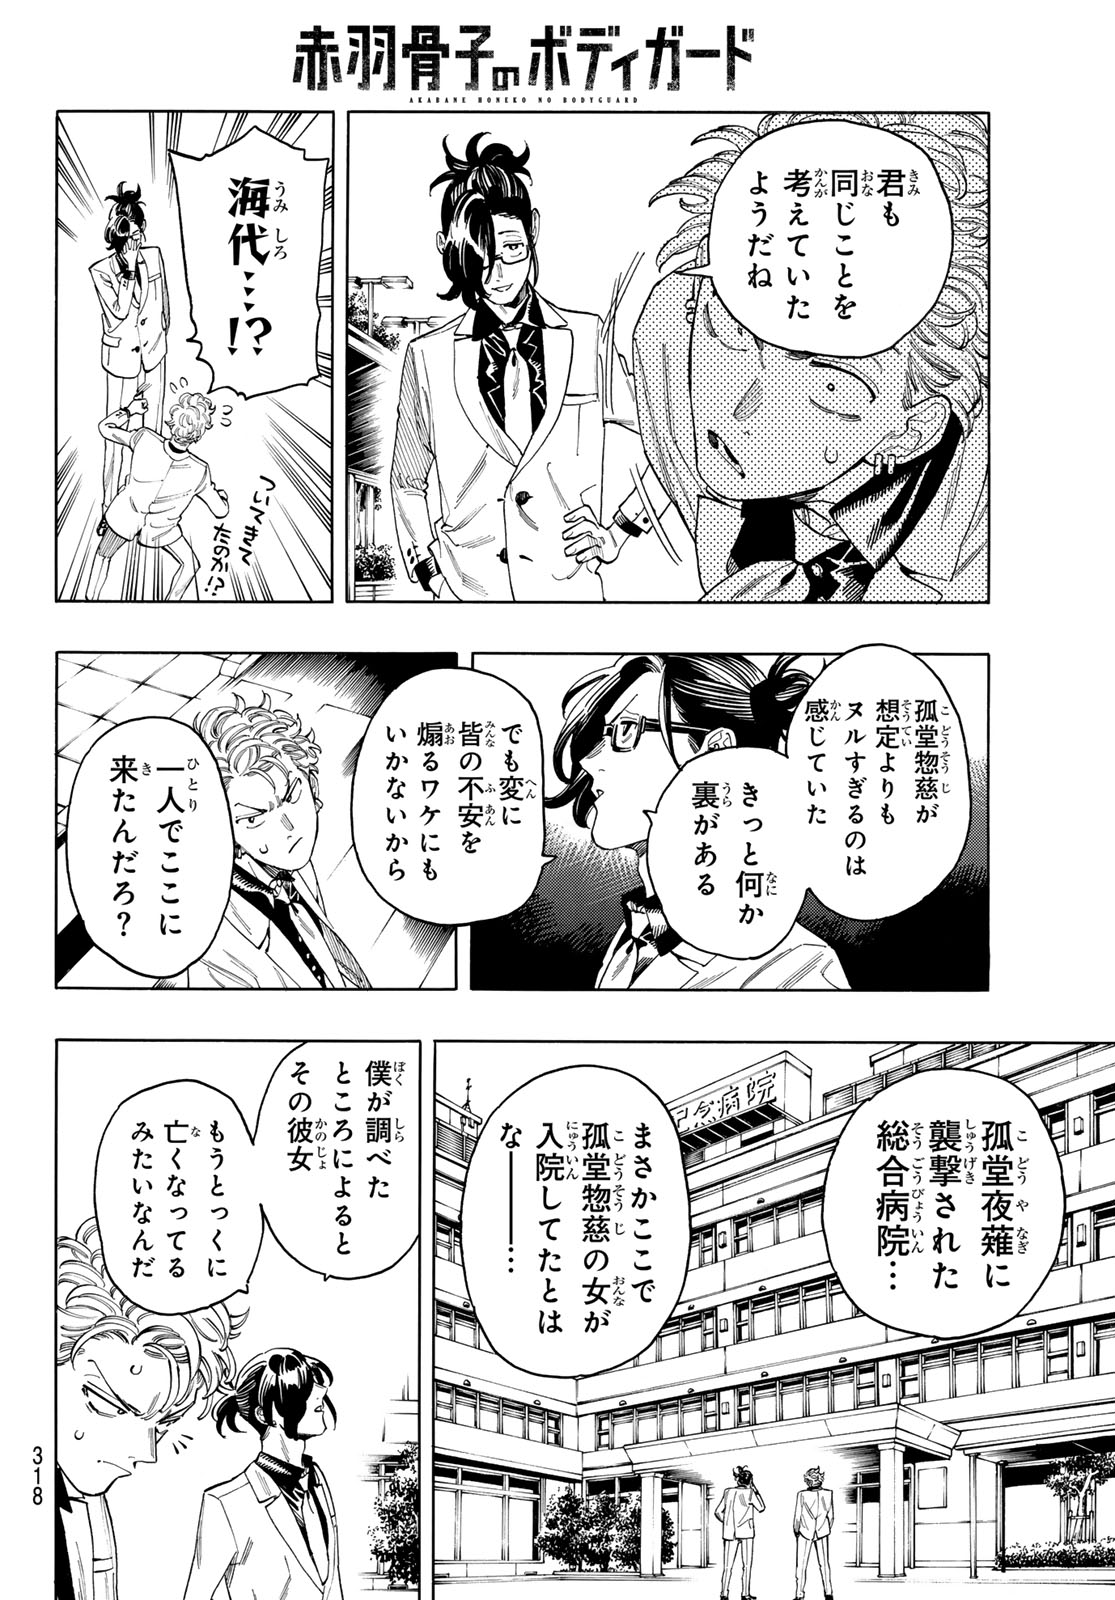 Akabane Honeko no Bodyguard - Chapter 84 - Page 12